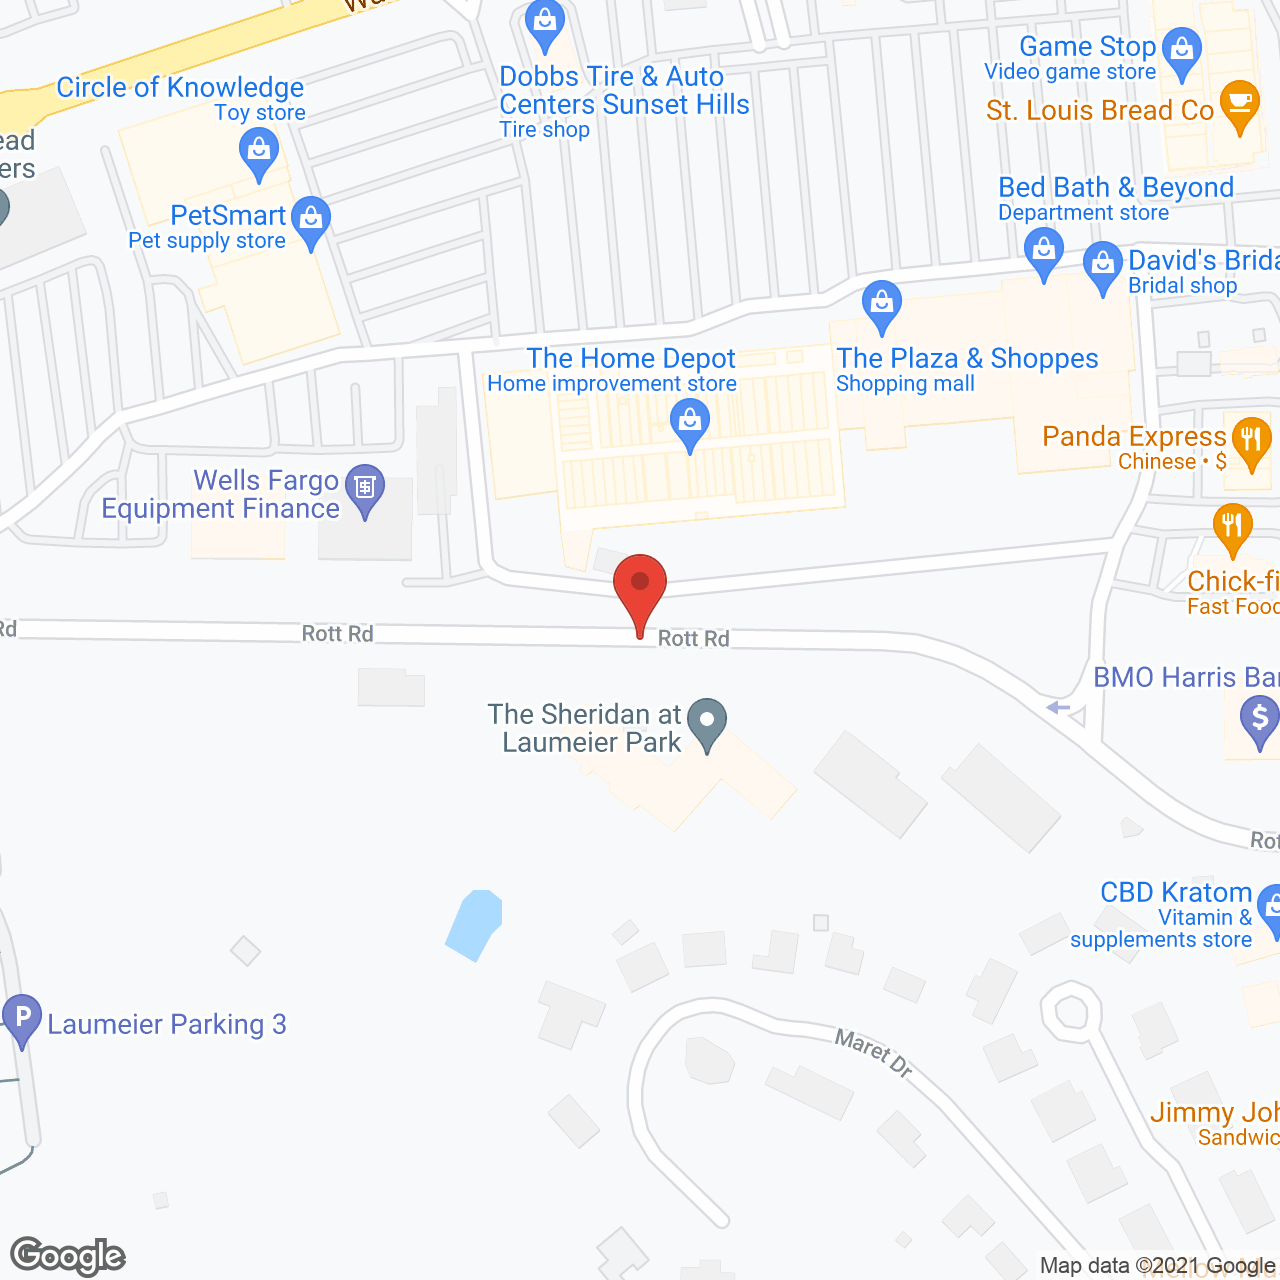 The Grande at Laumeier Park in google map